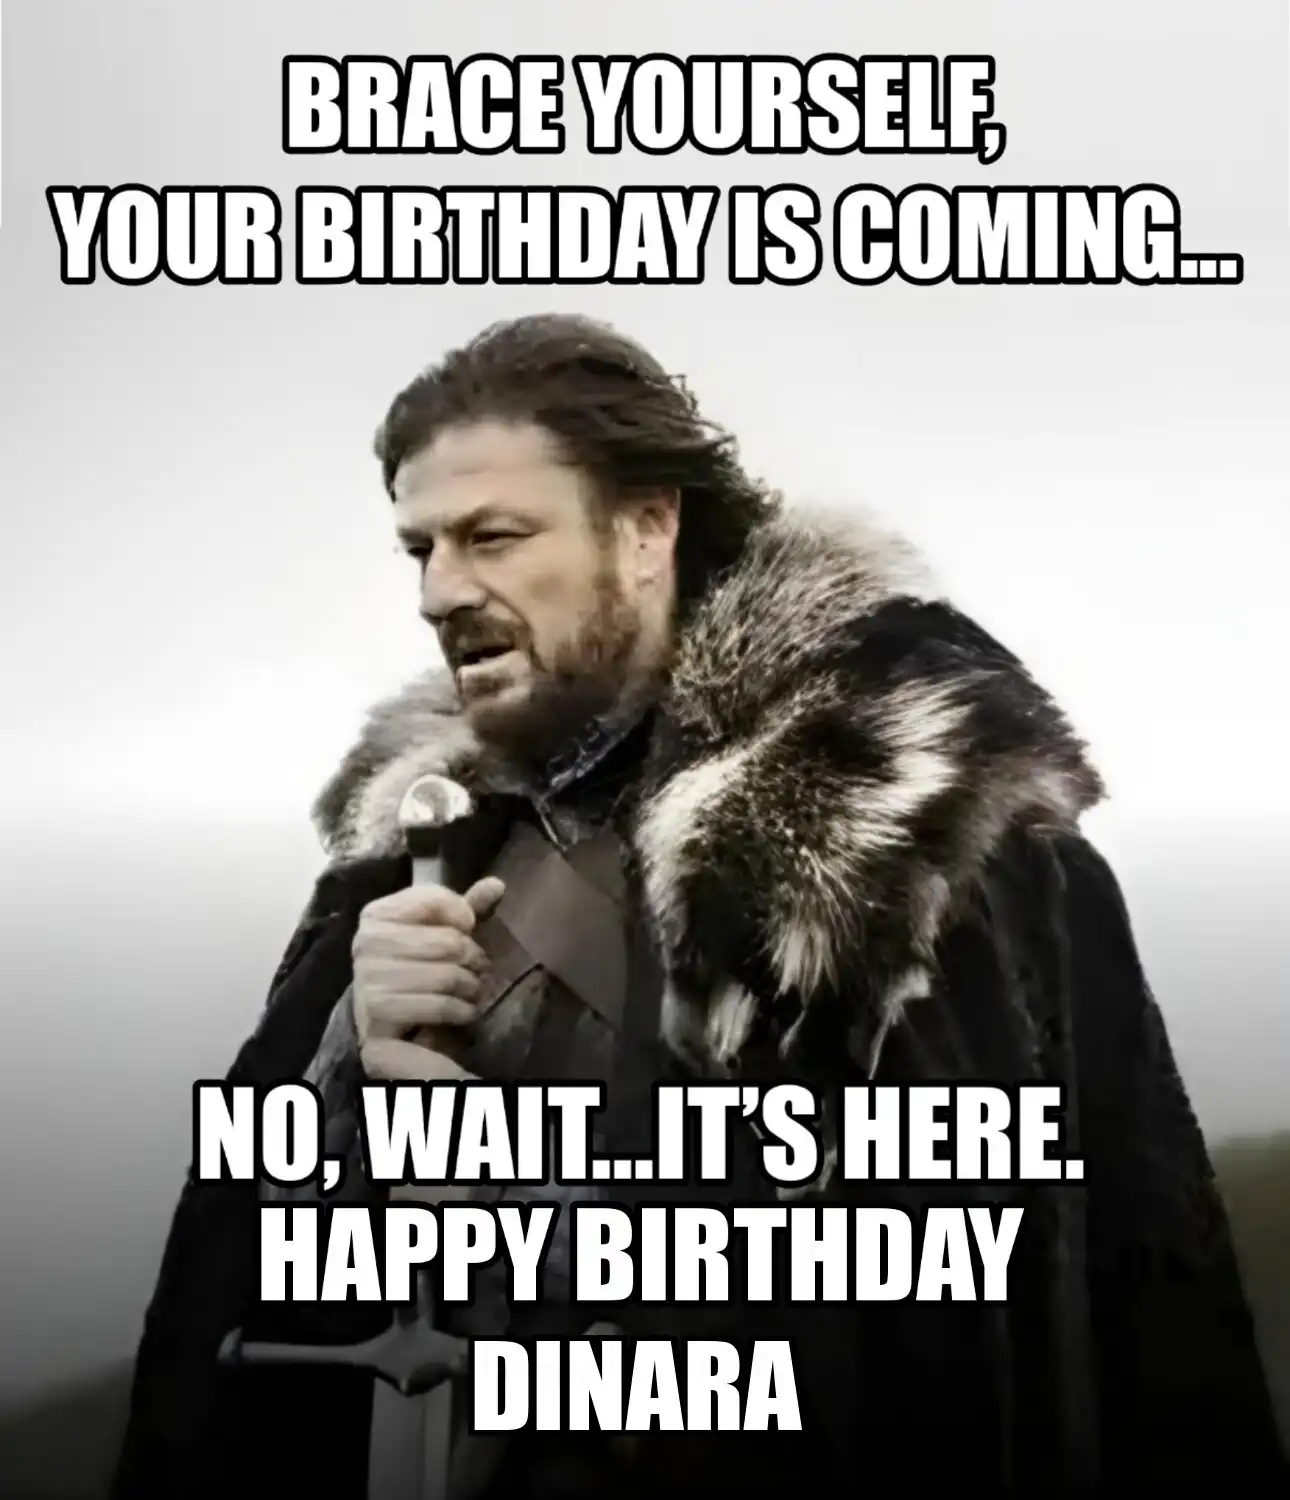 Happy Birthday Dinara Brace Yourself Your Birthday Is Coming Meme